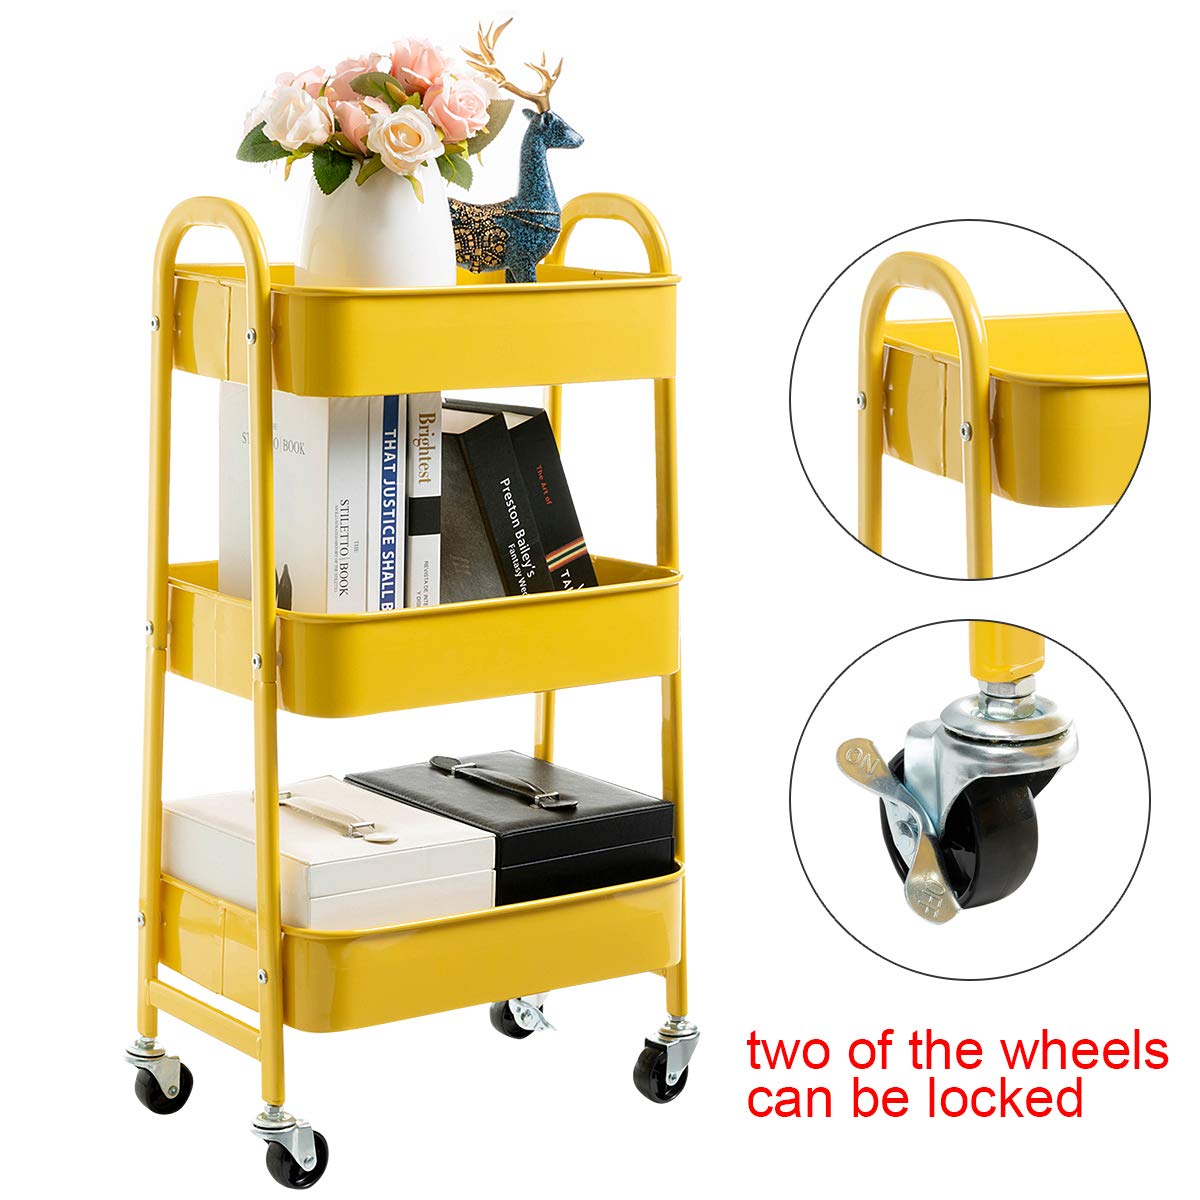 AGTEK Makeup Cart, Movable Rolling Organizer Cart, 3 Tier Metal Utility Cart, Yellow